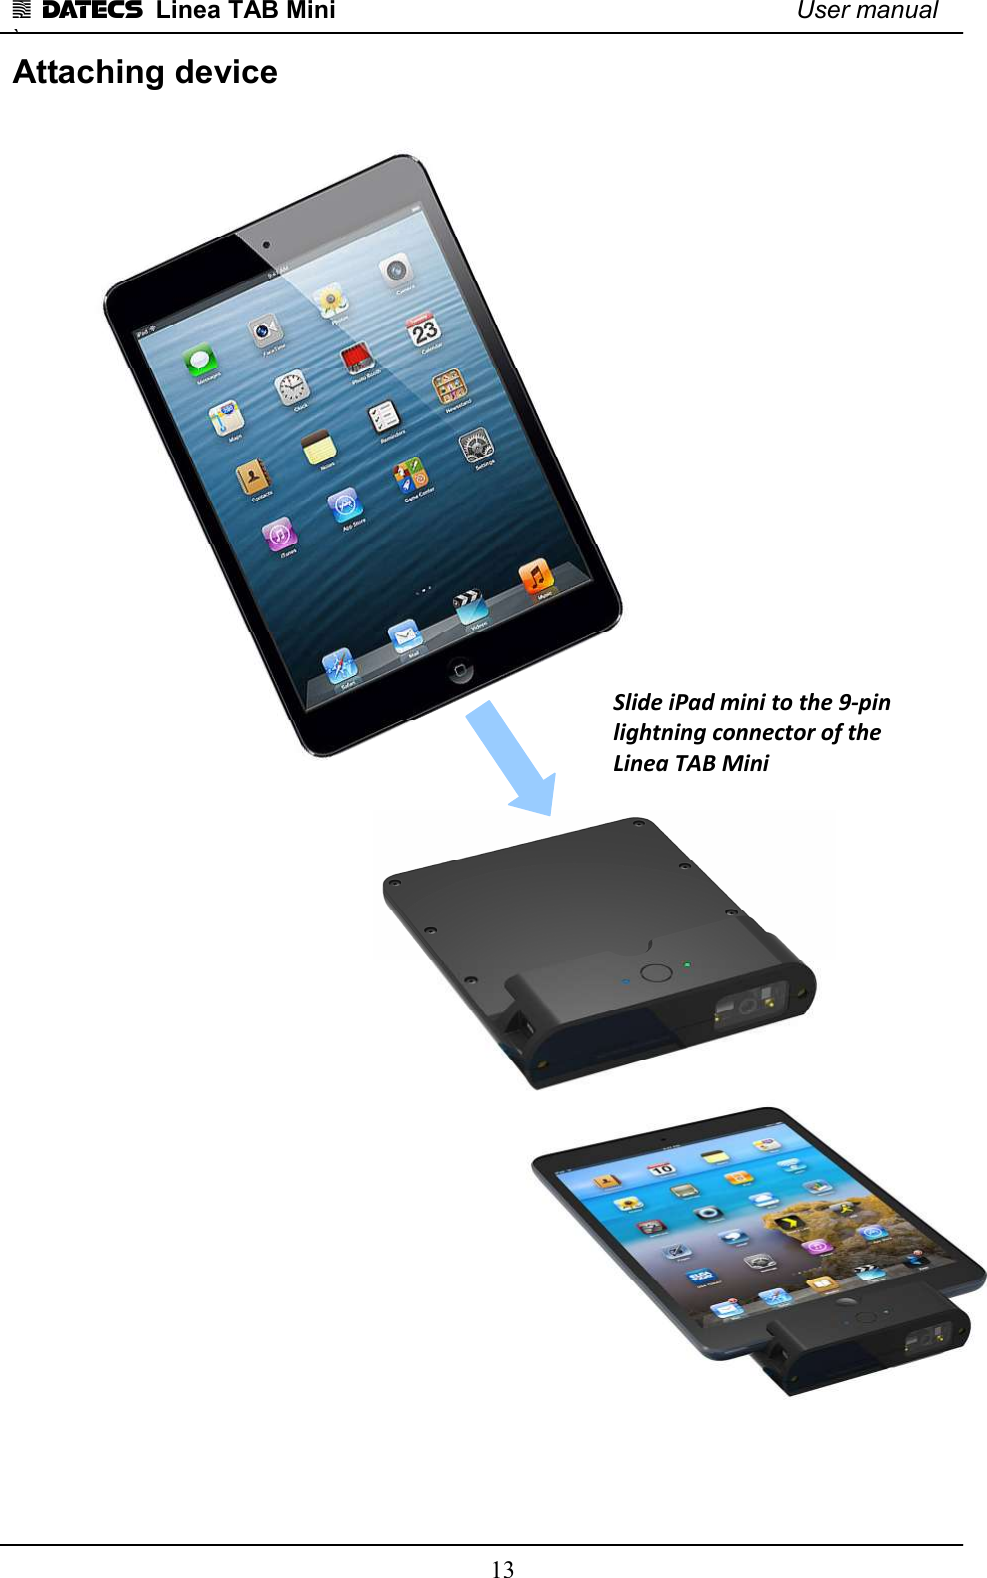 1 DATECS  Linea TAB Mini    User manual `    13 Attaching device   Slide iPad mini to the 9-pin lightning connector of the Linea TAB Mini  